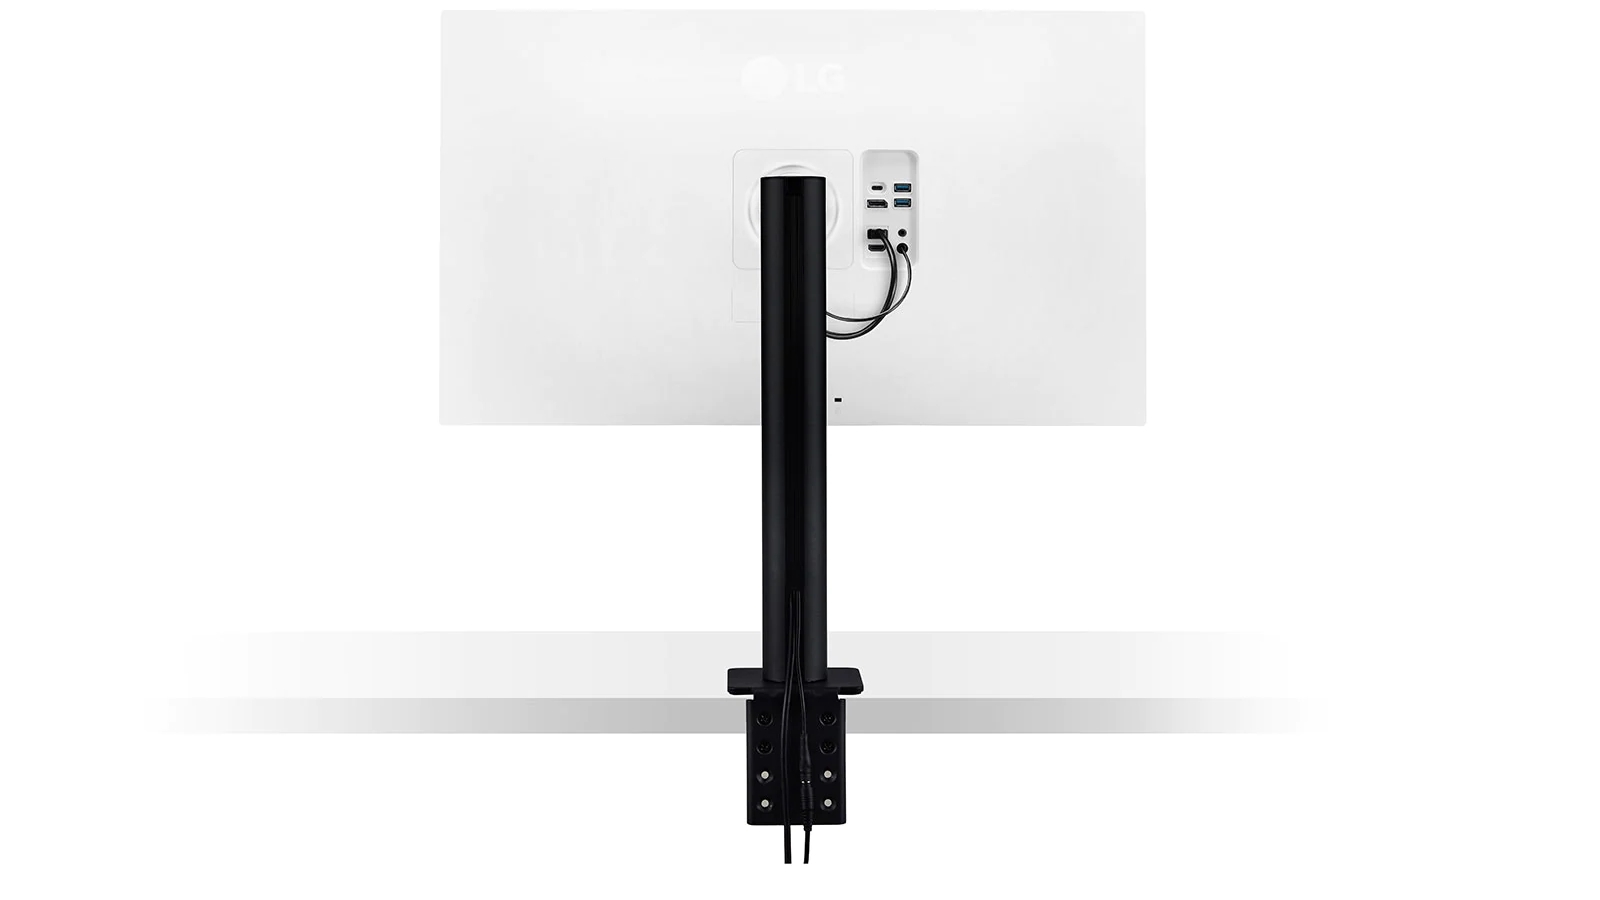 LG 32 Class Ultrafine UHD IPS Monitor with ErgoStand